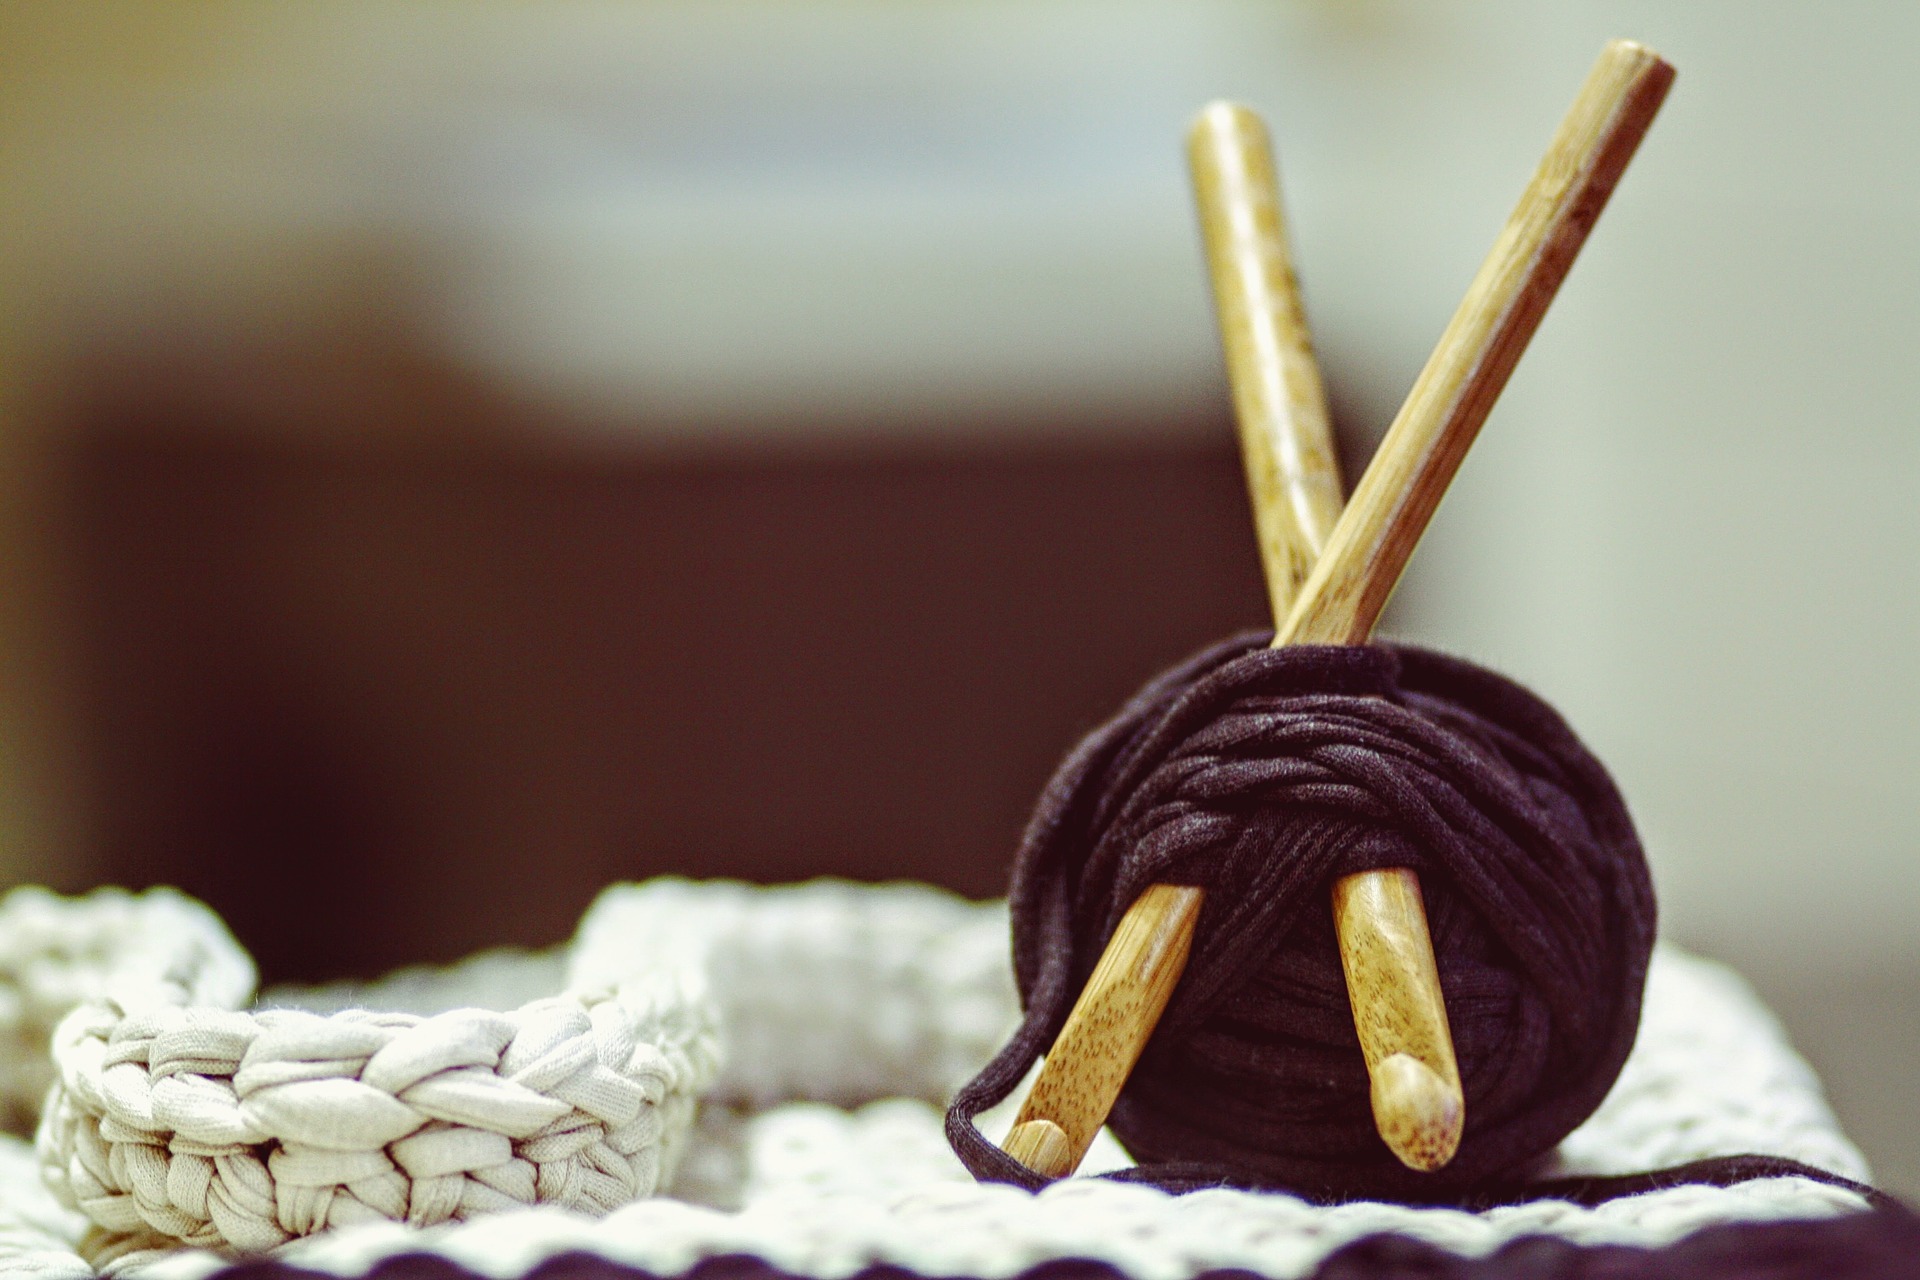 Ball of yarn with crochet hooks